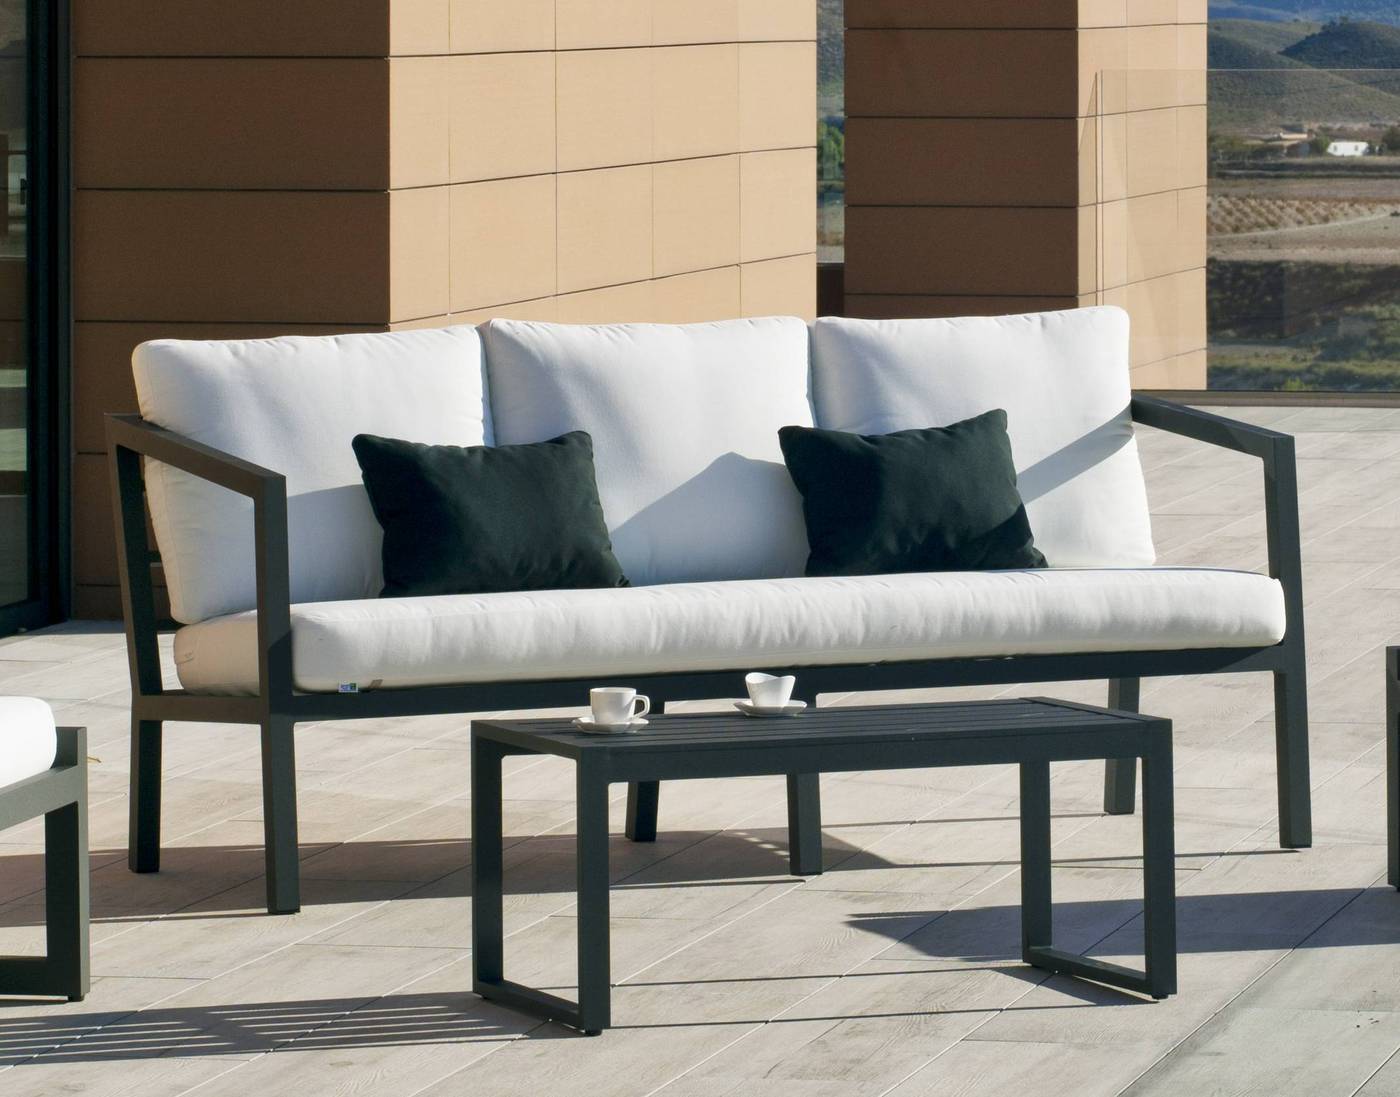 Sofá 3 plazas con cojines gran confort desenfundables. Estructura aluminio  color blanco, plata, marrón, champagne o antracita.